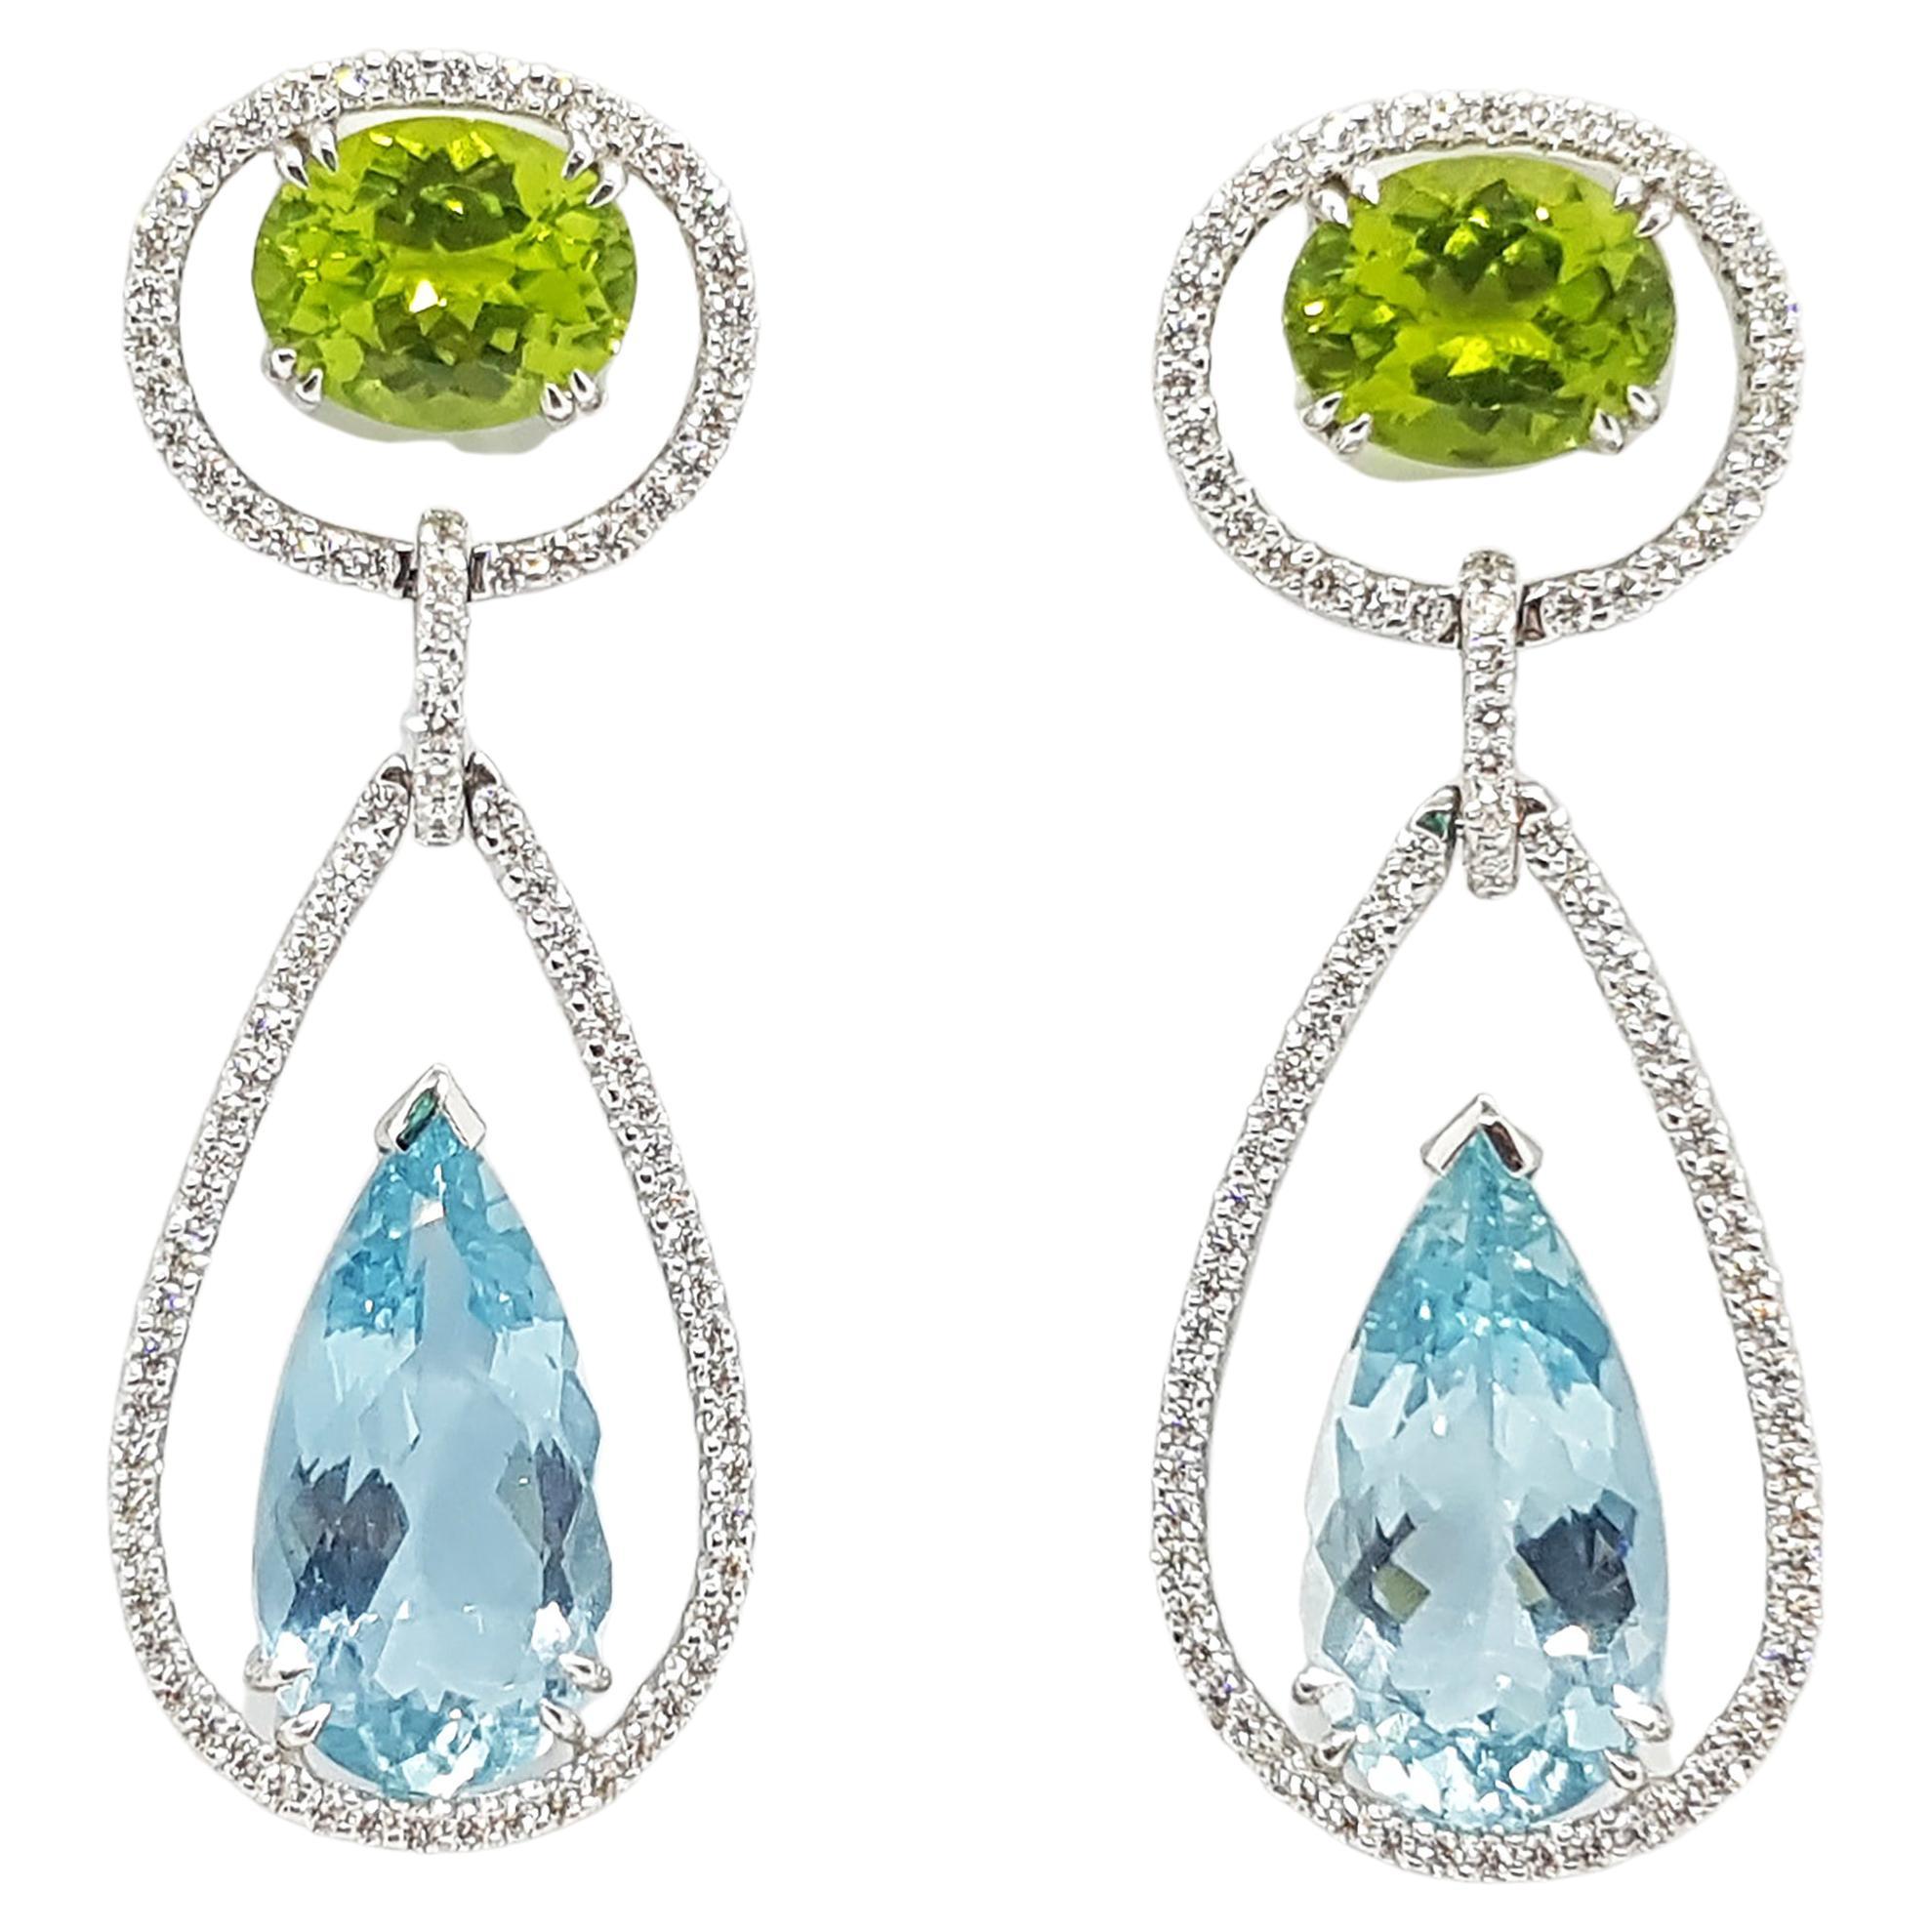 Peridot, Aquamarine and Diamond Earrings Set in 18 Karat White Gold Settings